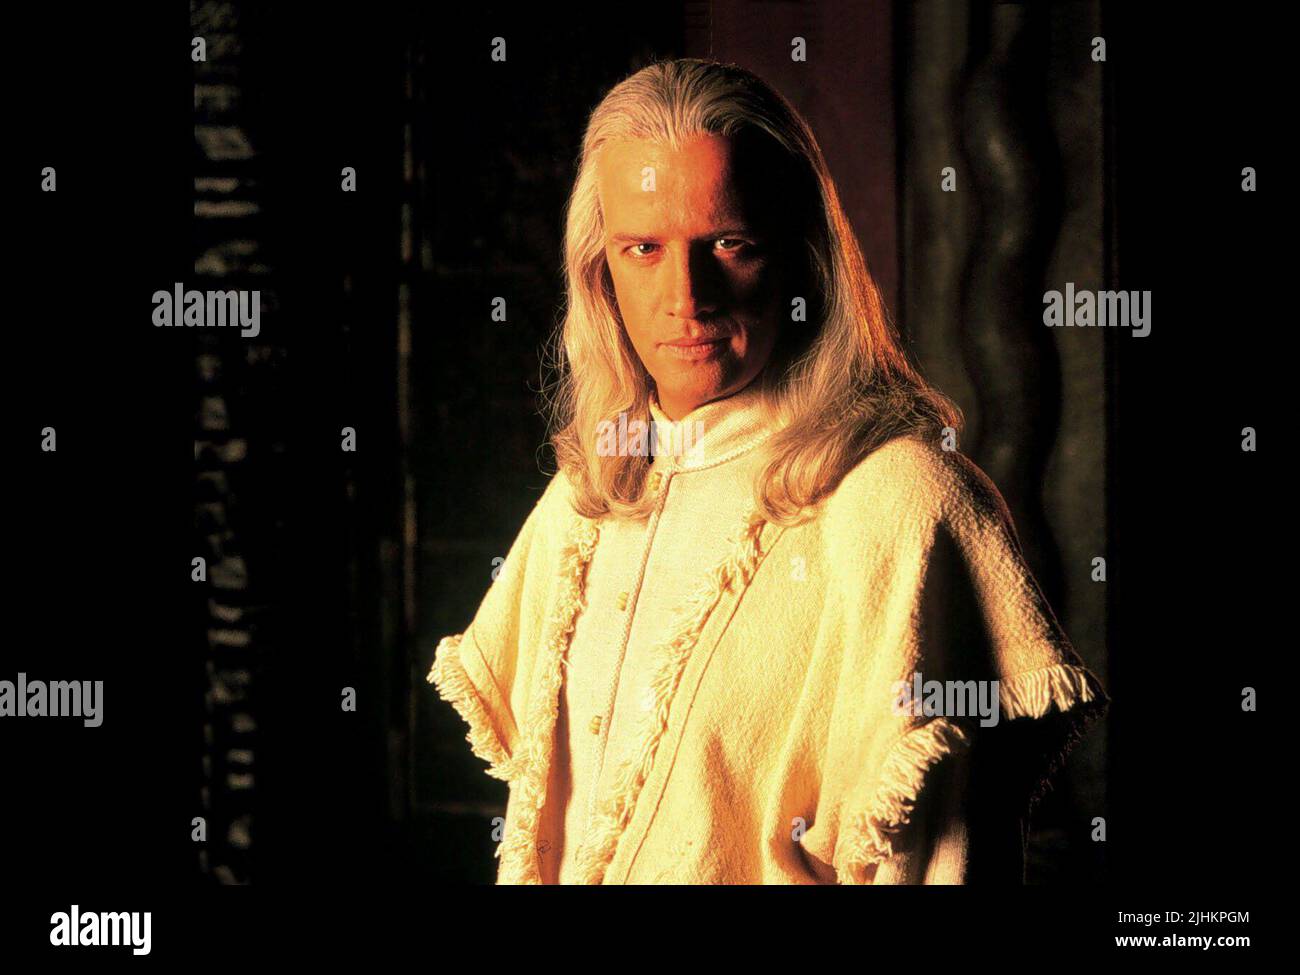 Mortal kombat 1995 hi-res stock photography and images - Alamy